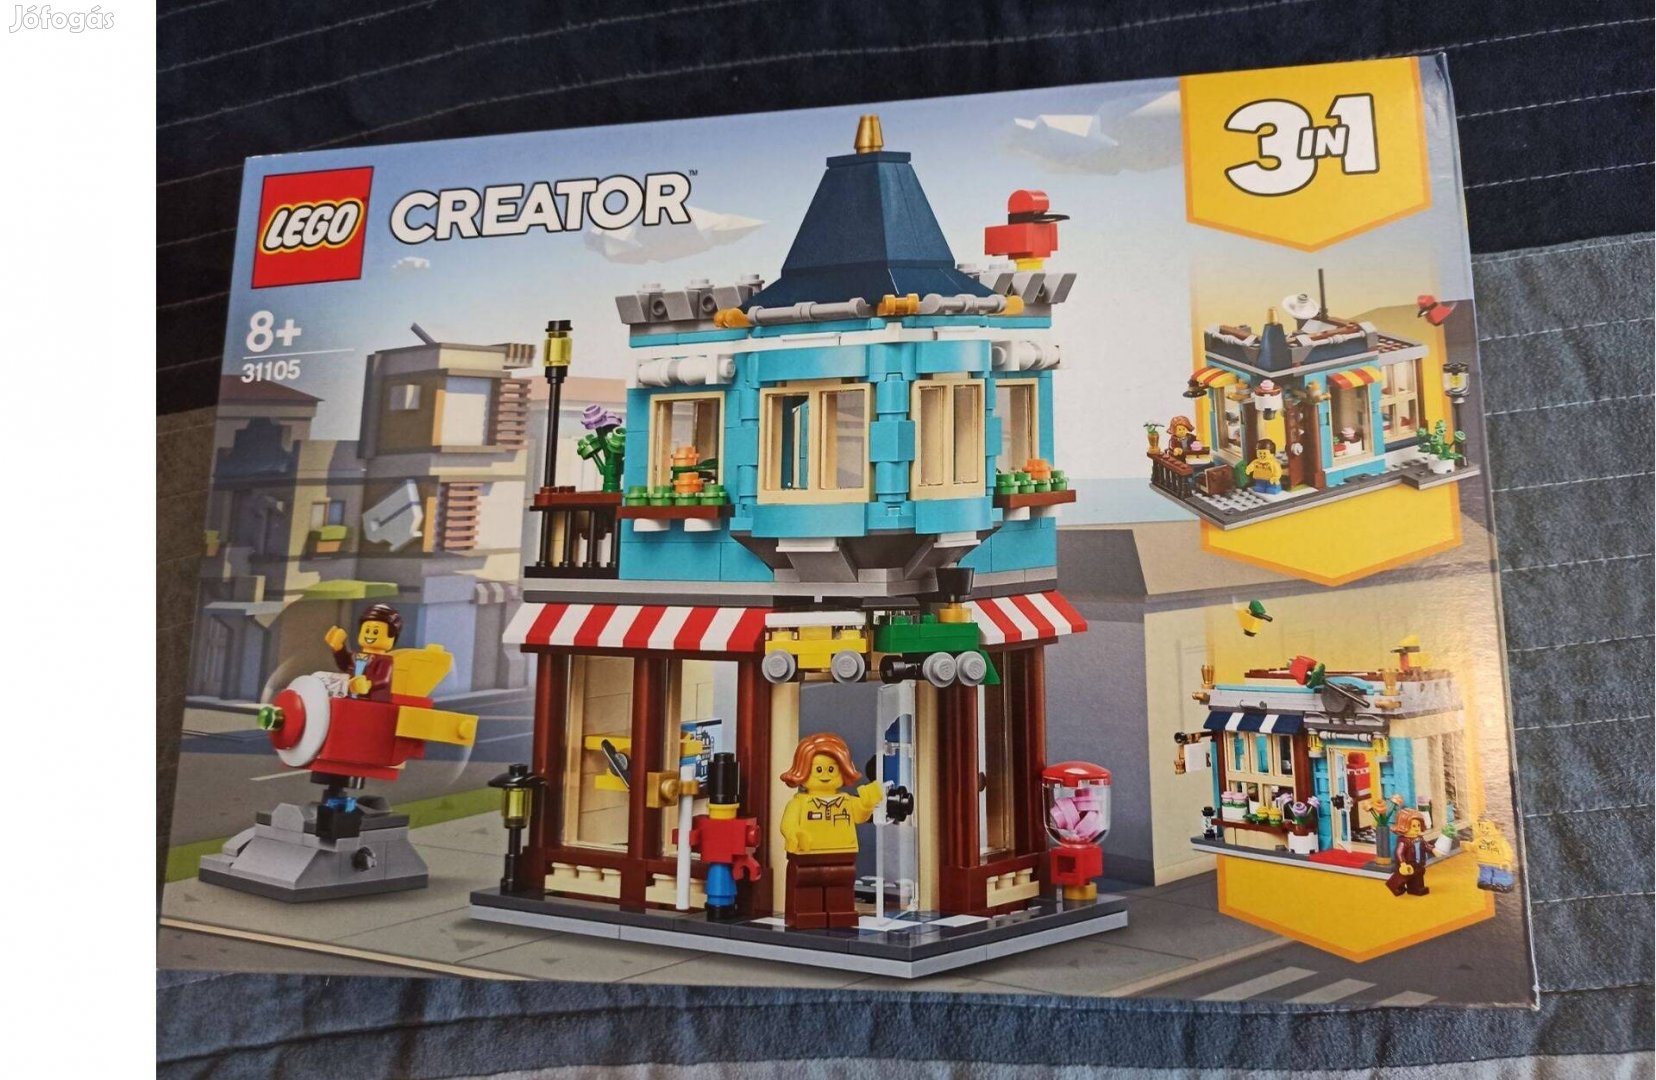 Lego /Creator 3in1/ 31105 Városi játékbolt - új, bontatlan